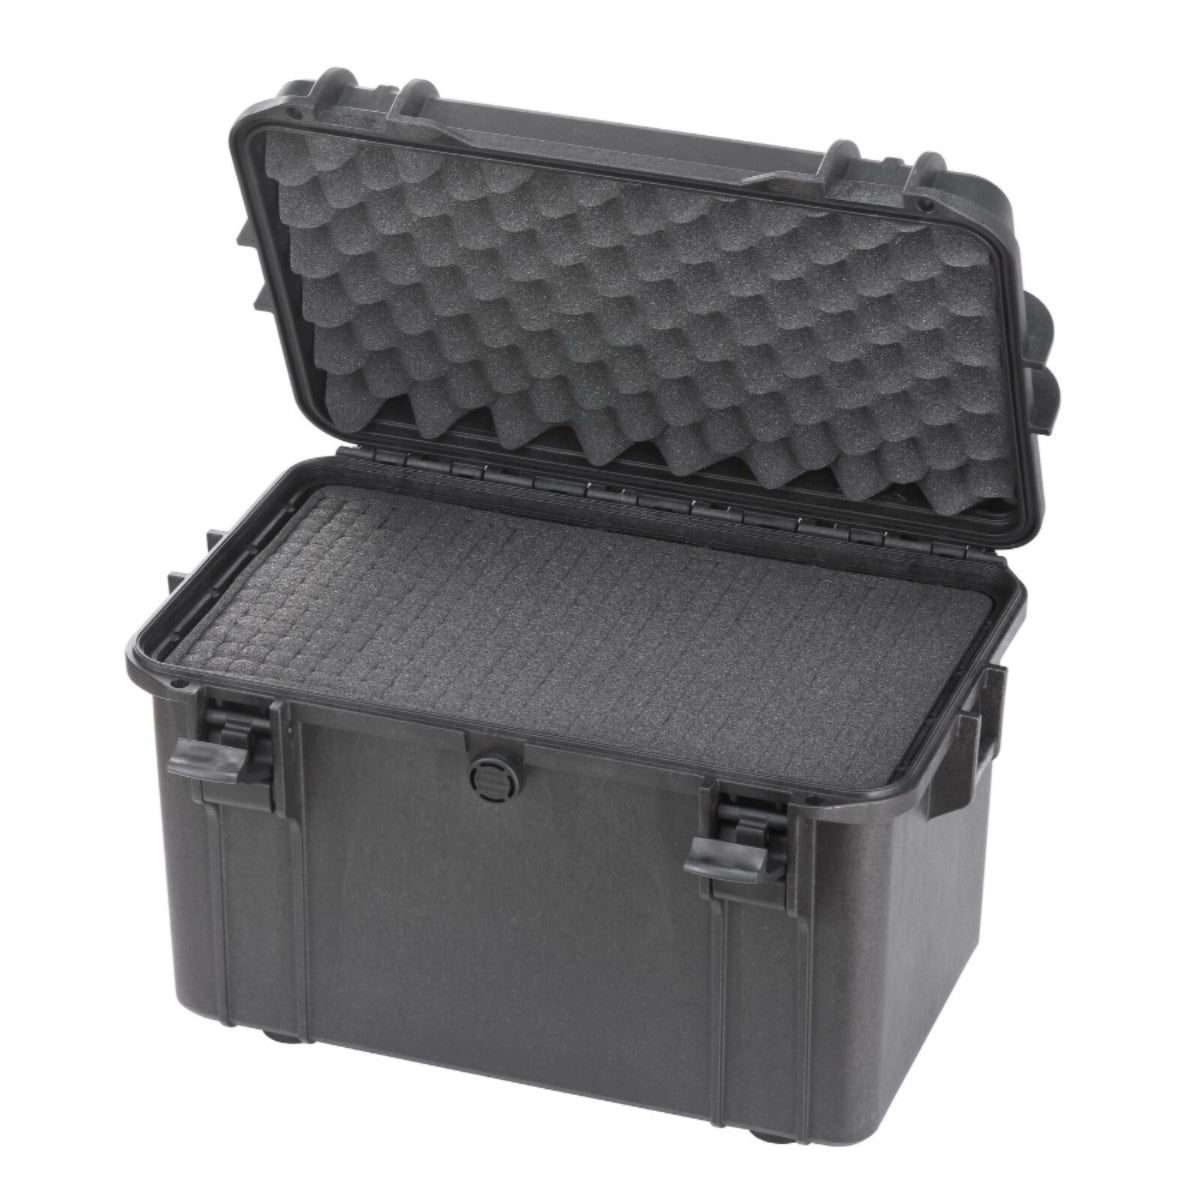 SP PRO 400S Black Carry Case, Cubed Foam, ID: L400xW230xH260mm